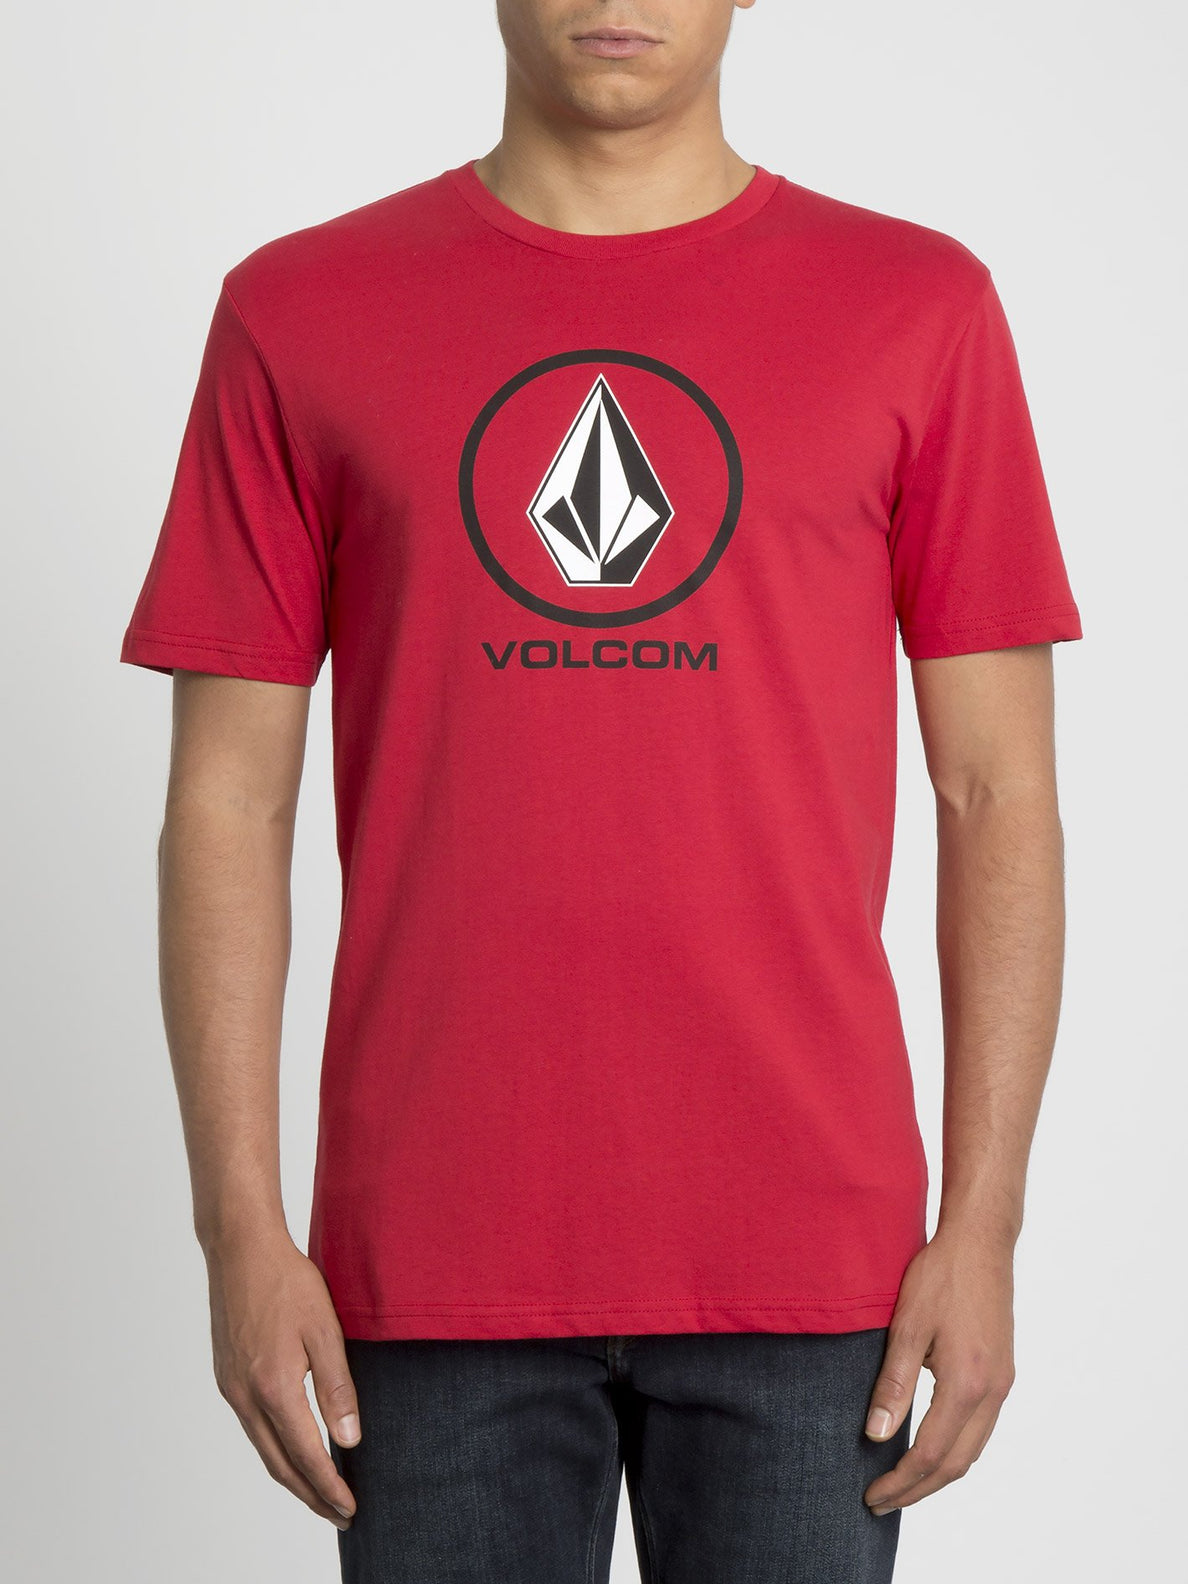 volcom red shirt